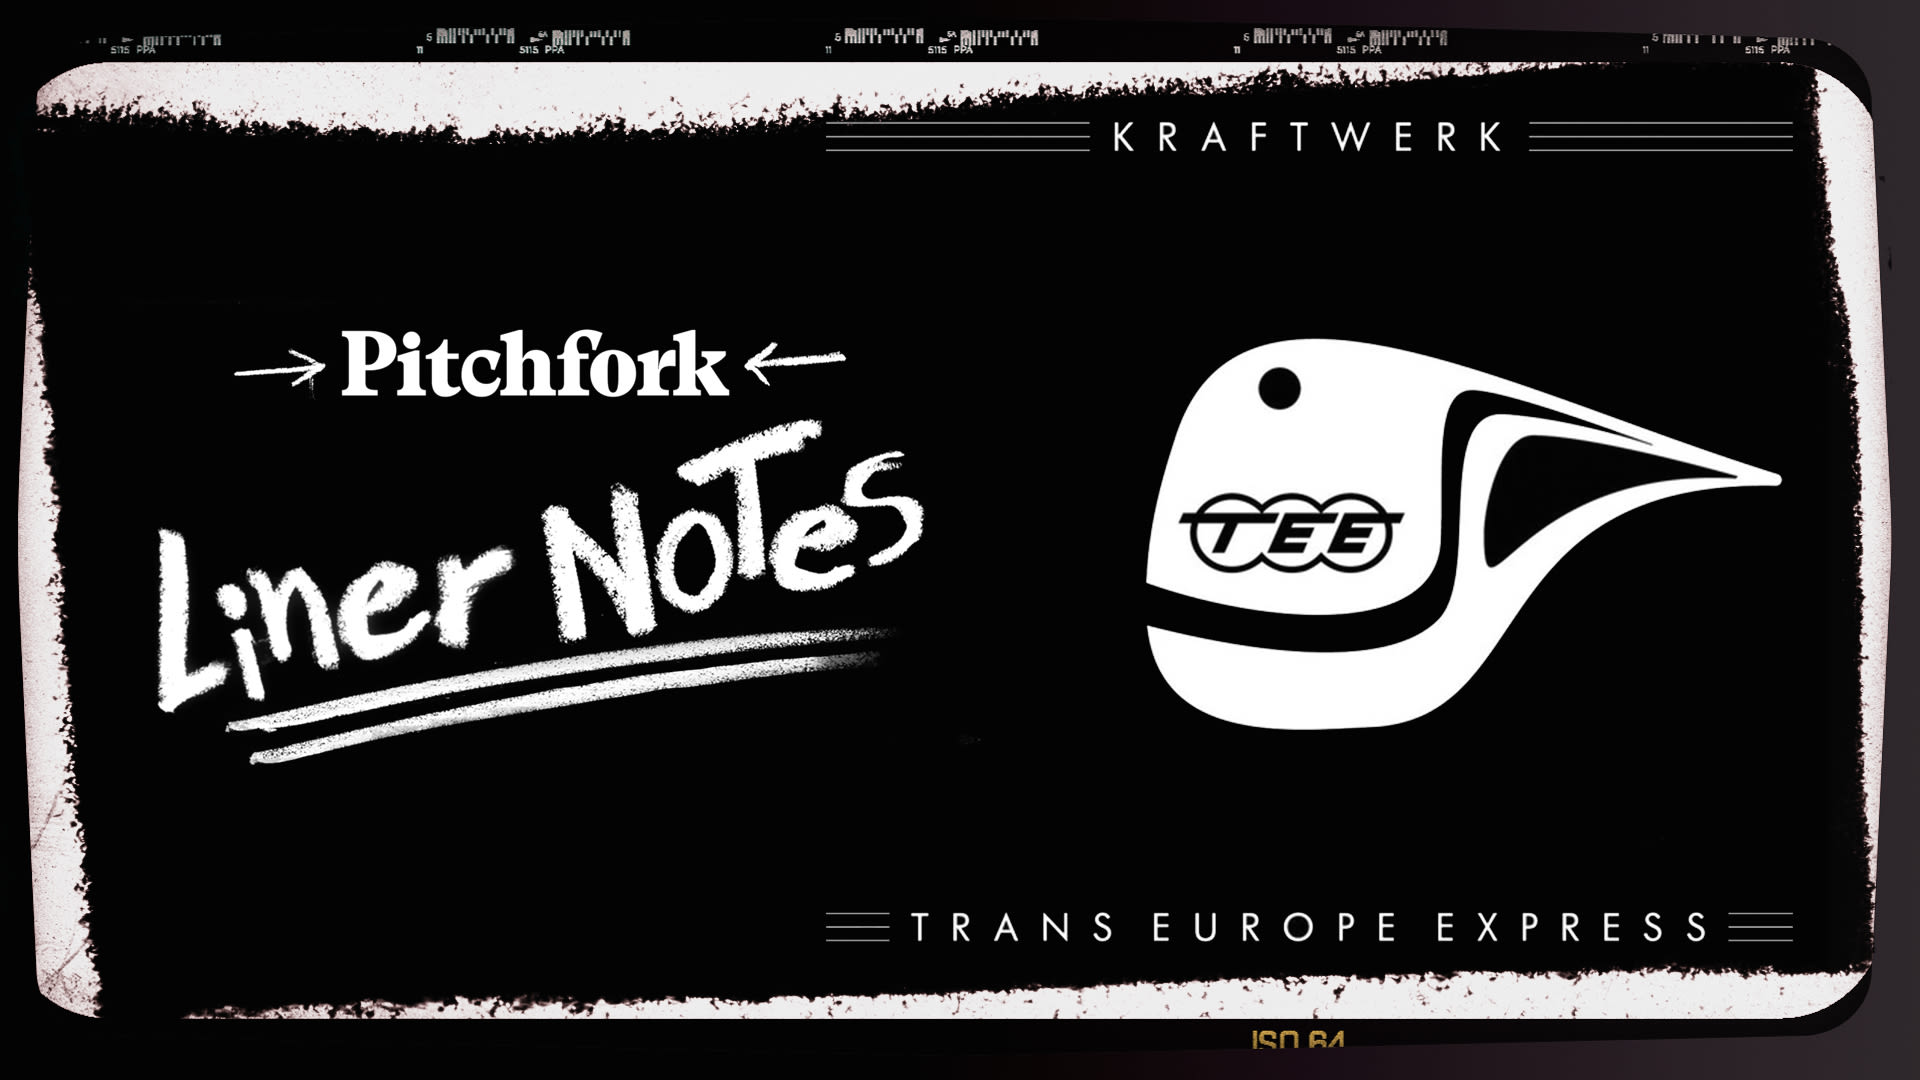 Watch Kraftwerk's Trans-Europe Express in 4 Minutes, Pitchfork Docs